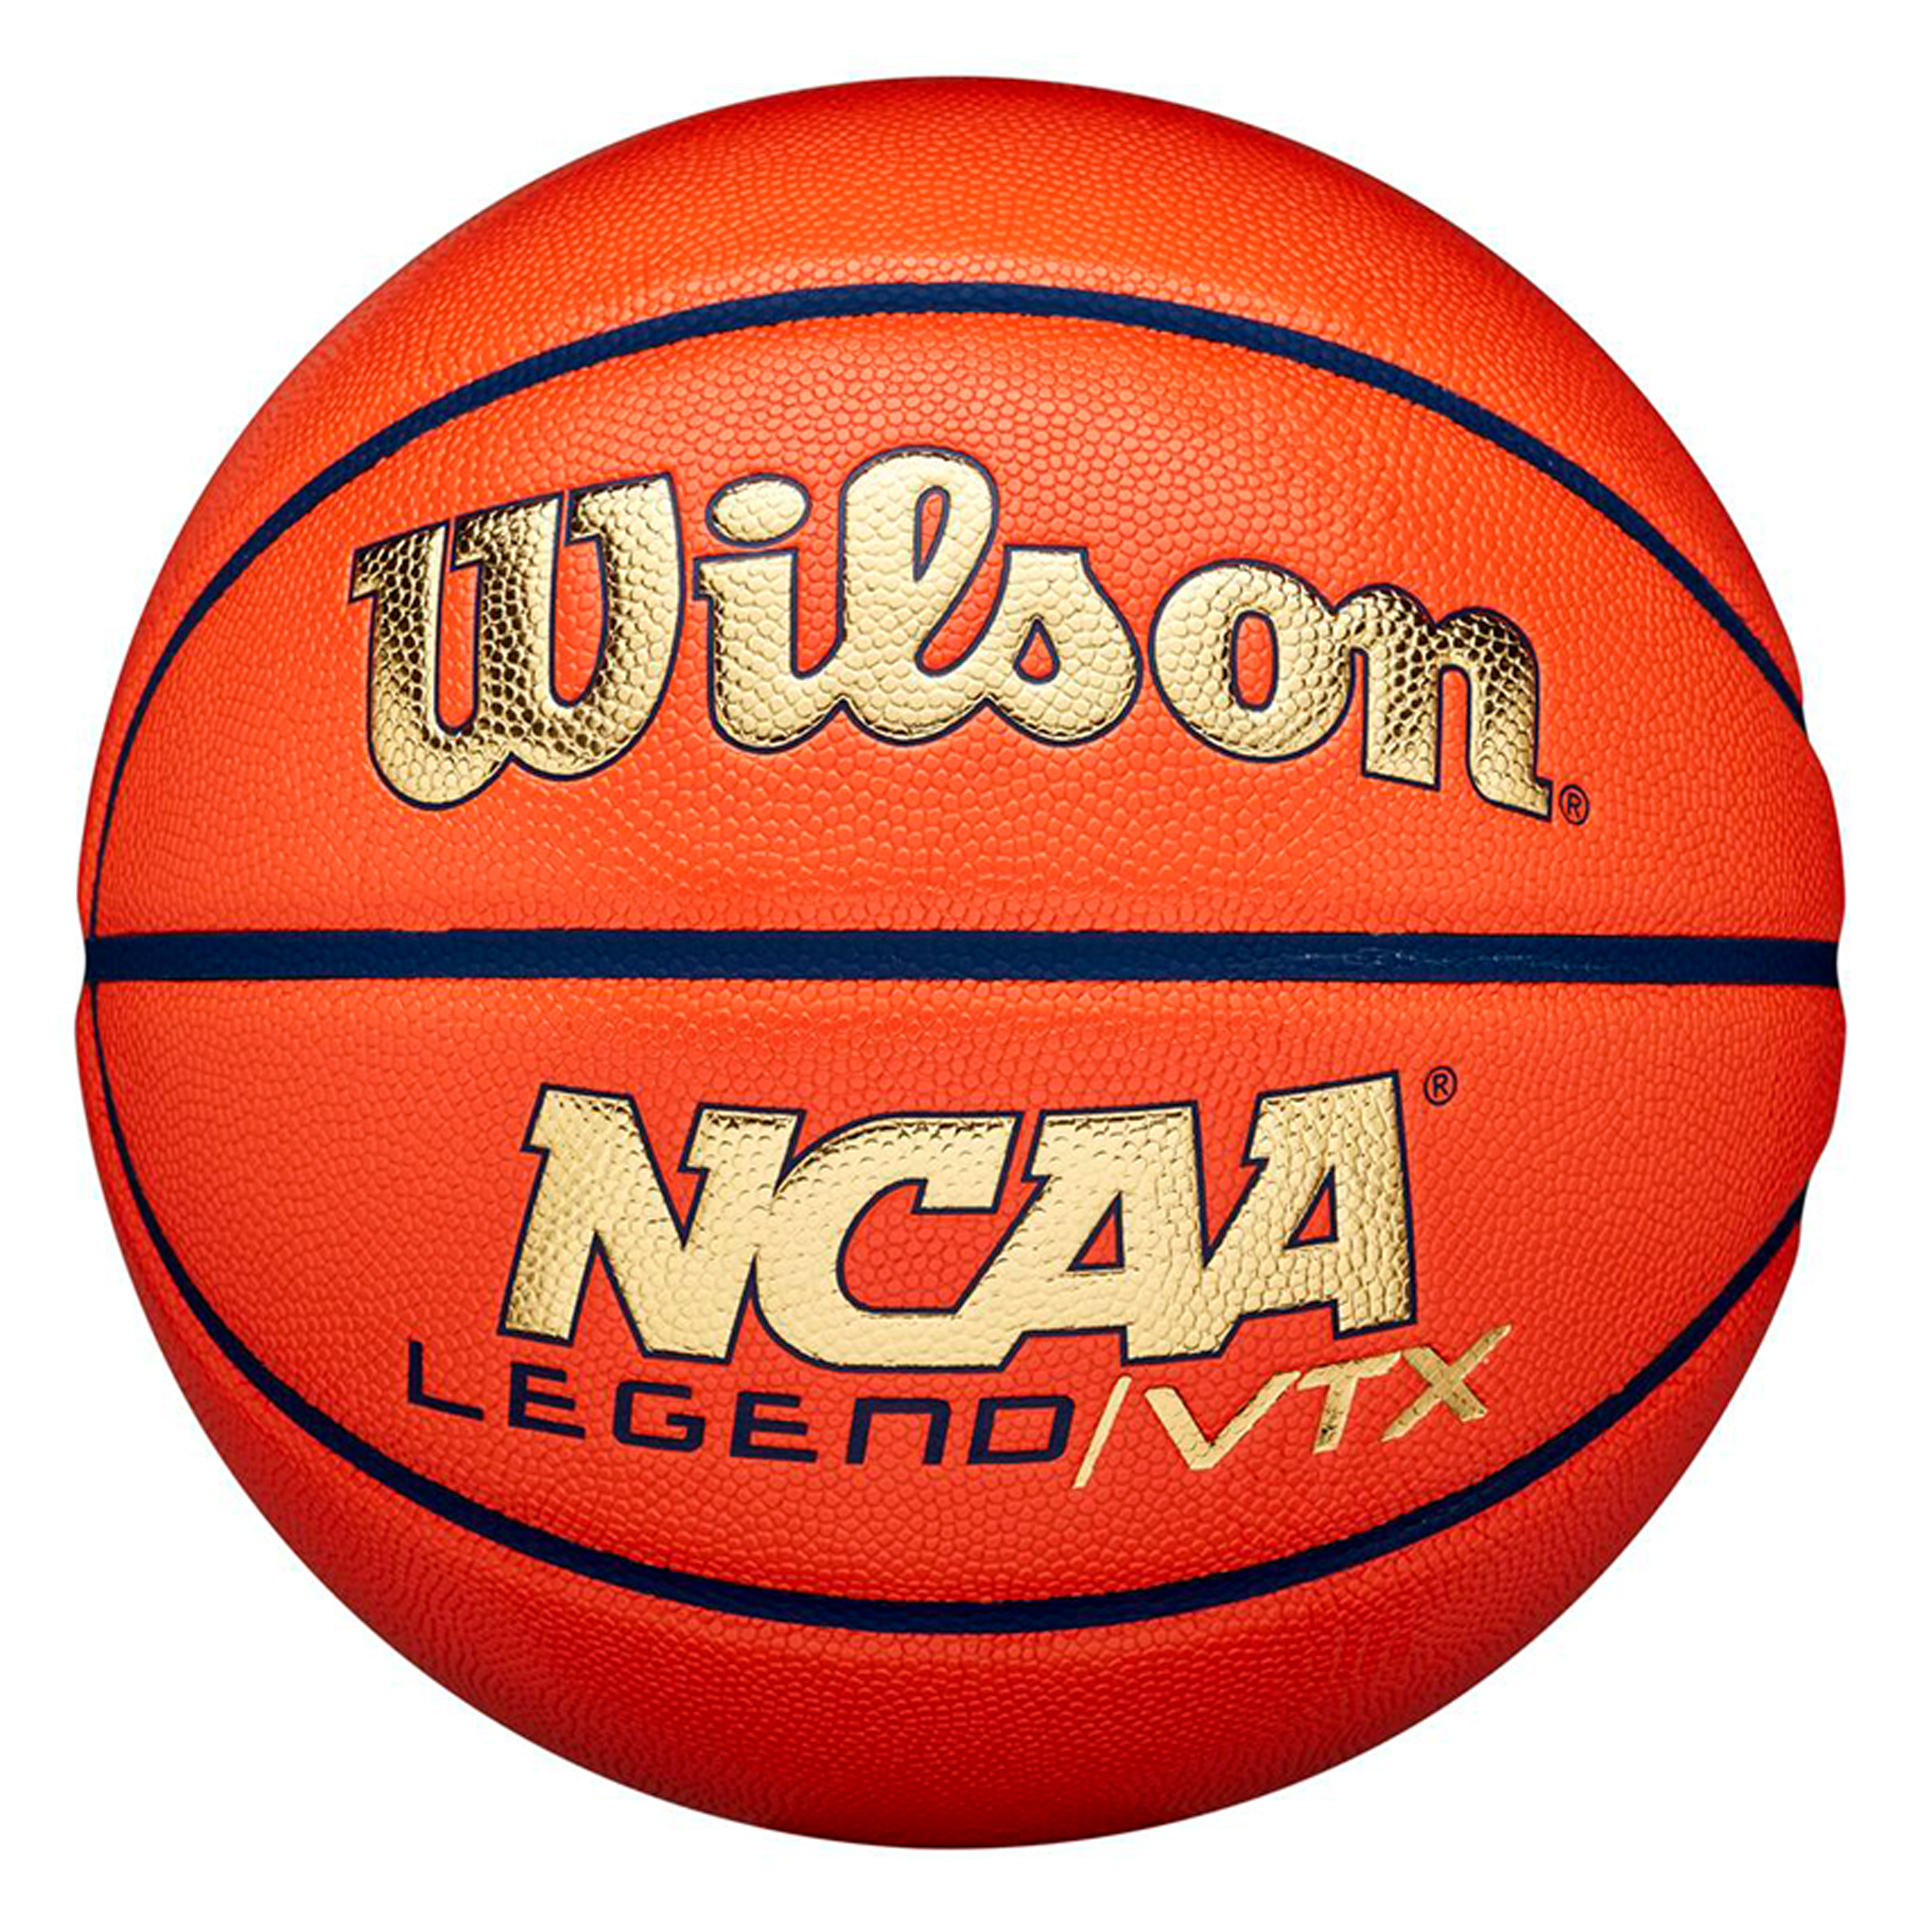 balón baloncesto wilson ncaa legend vtx bskt orange/gold talla 7 1